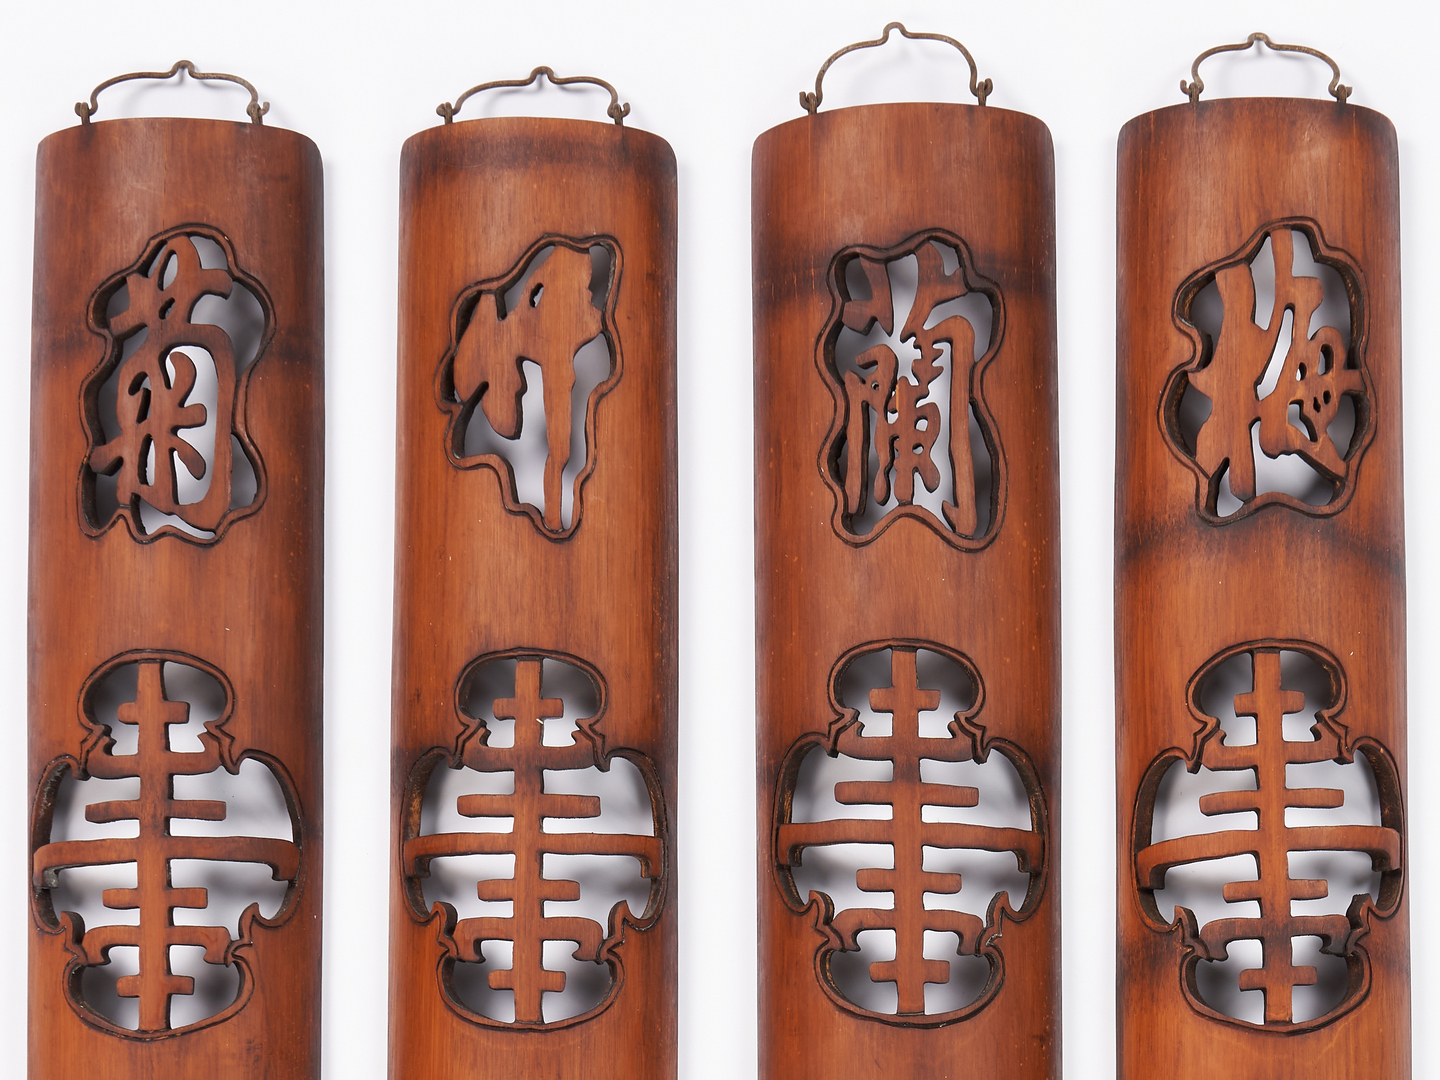 Lot 1187: Japanese Four Seasons Wall Carvings, Sakura Ranma, 5 items